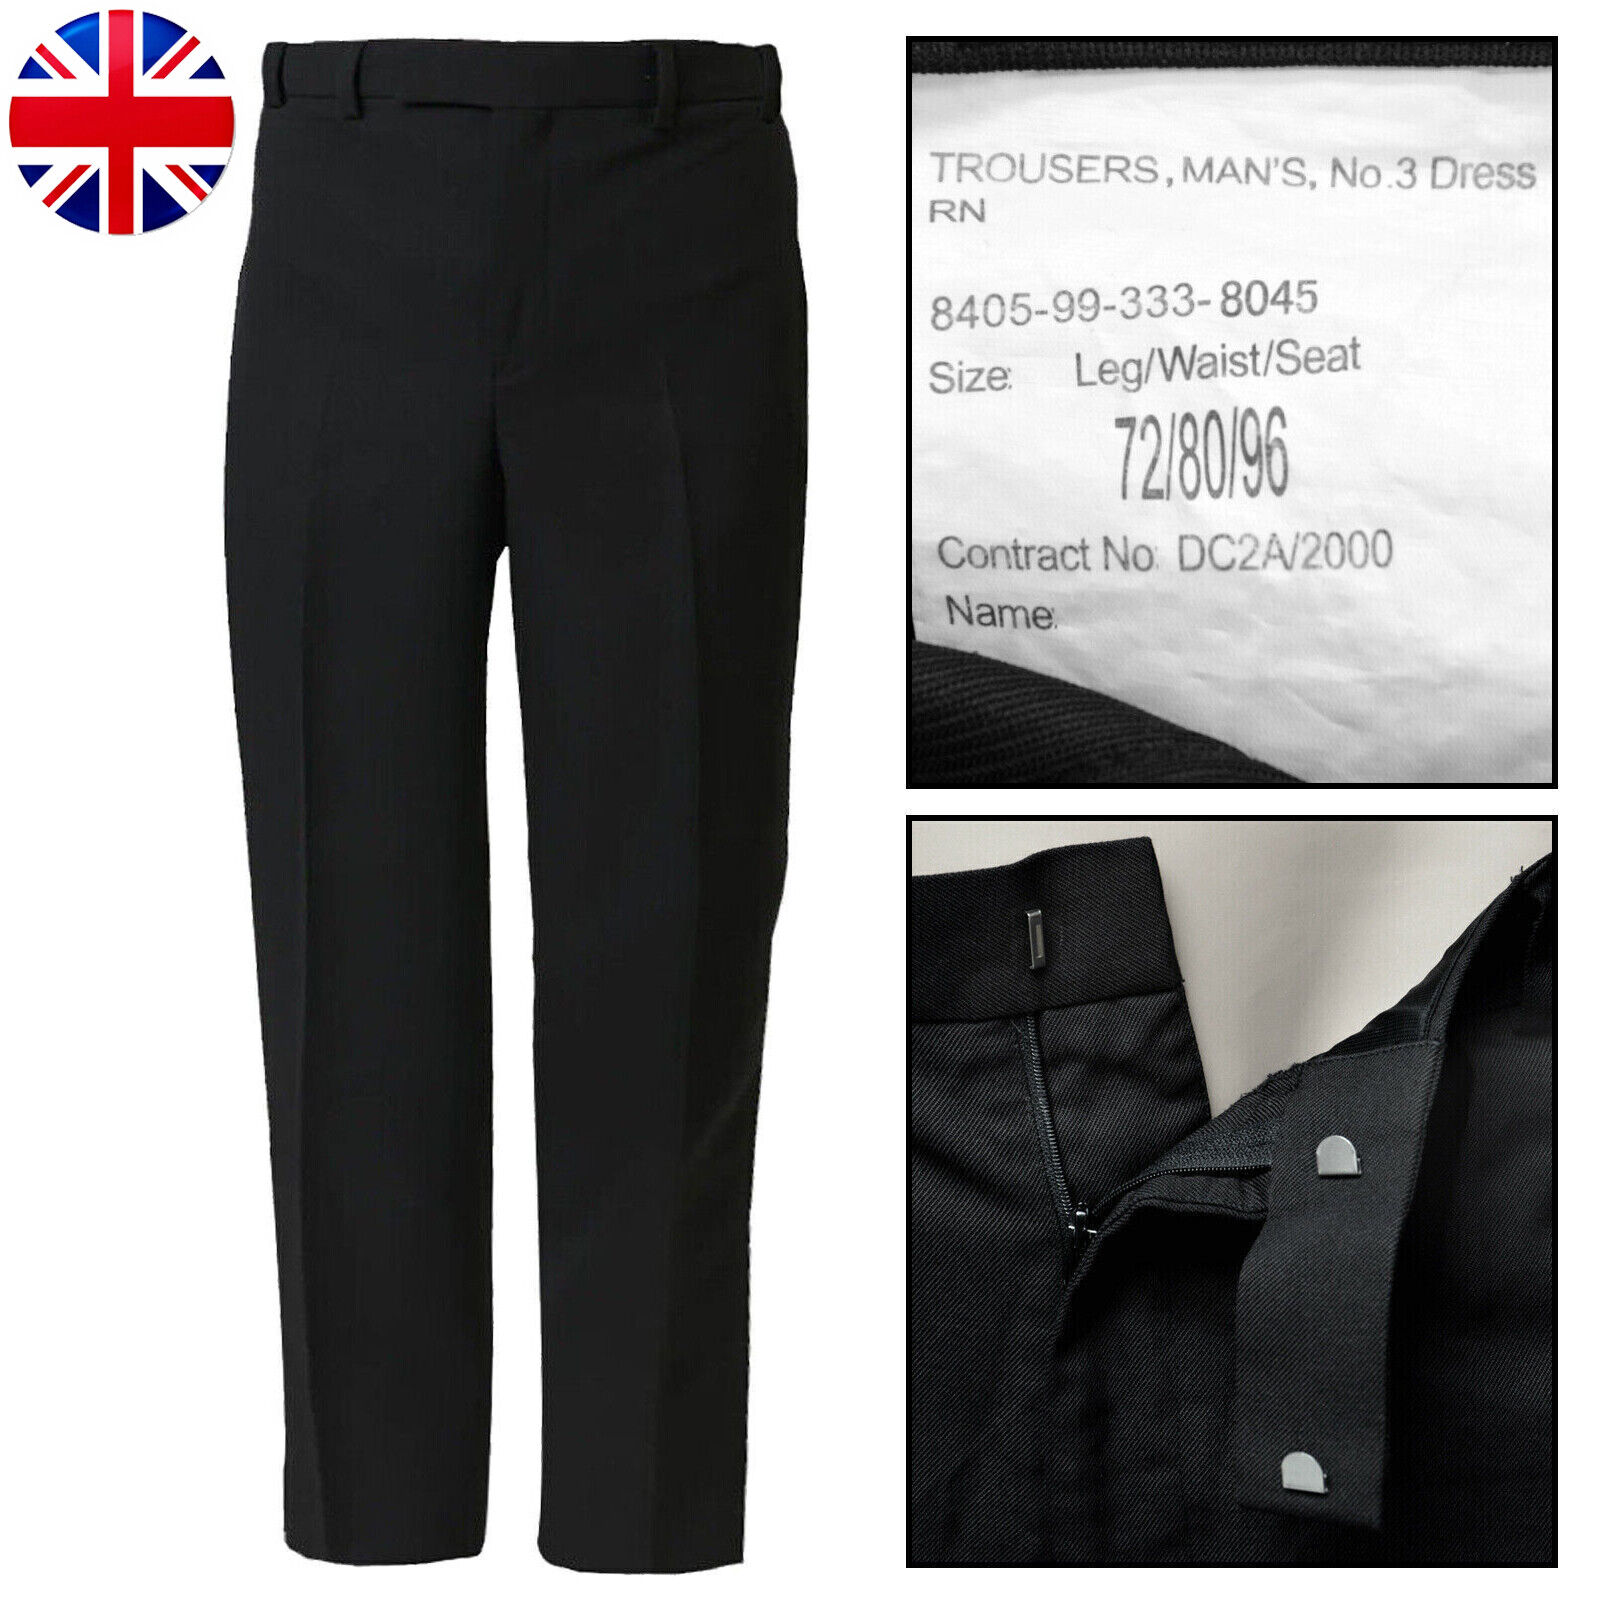 British Army Trousers Pants Uniform Royal Navy No 3 Black Lightweight 60% Wool